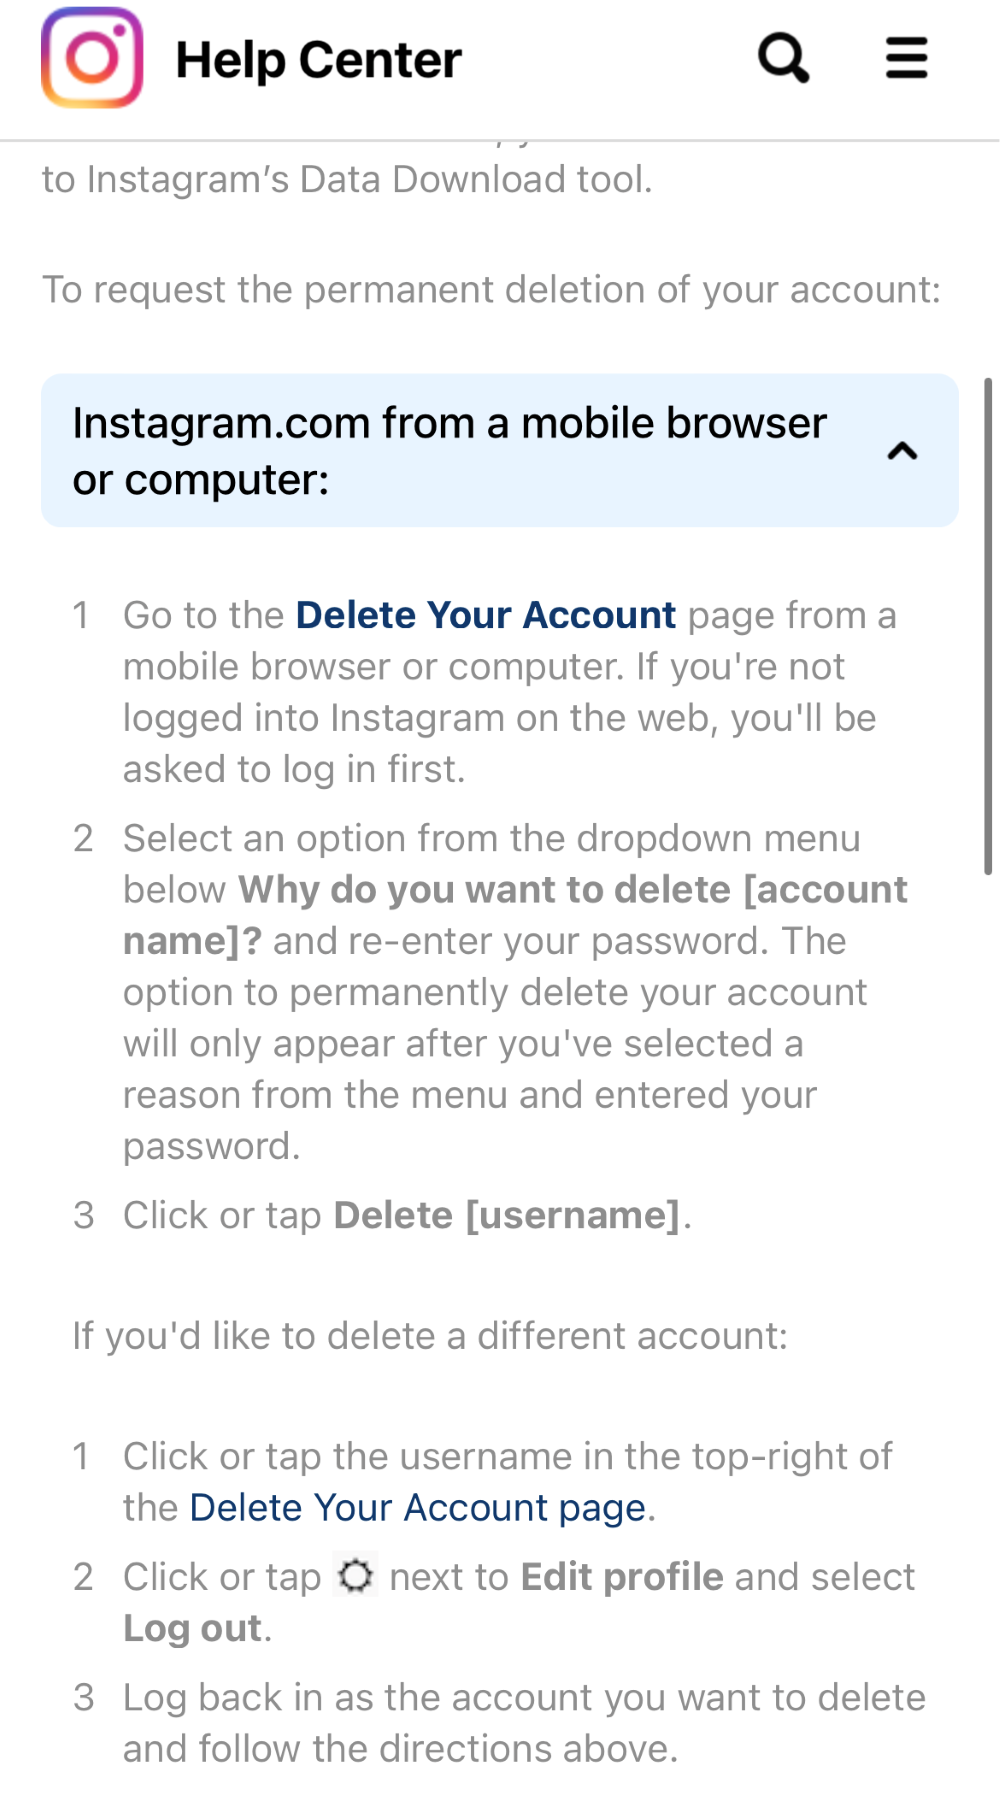 Click the Delete Your Account button